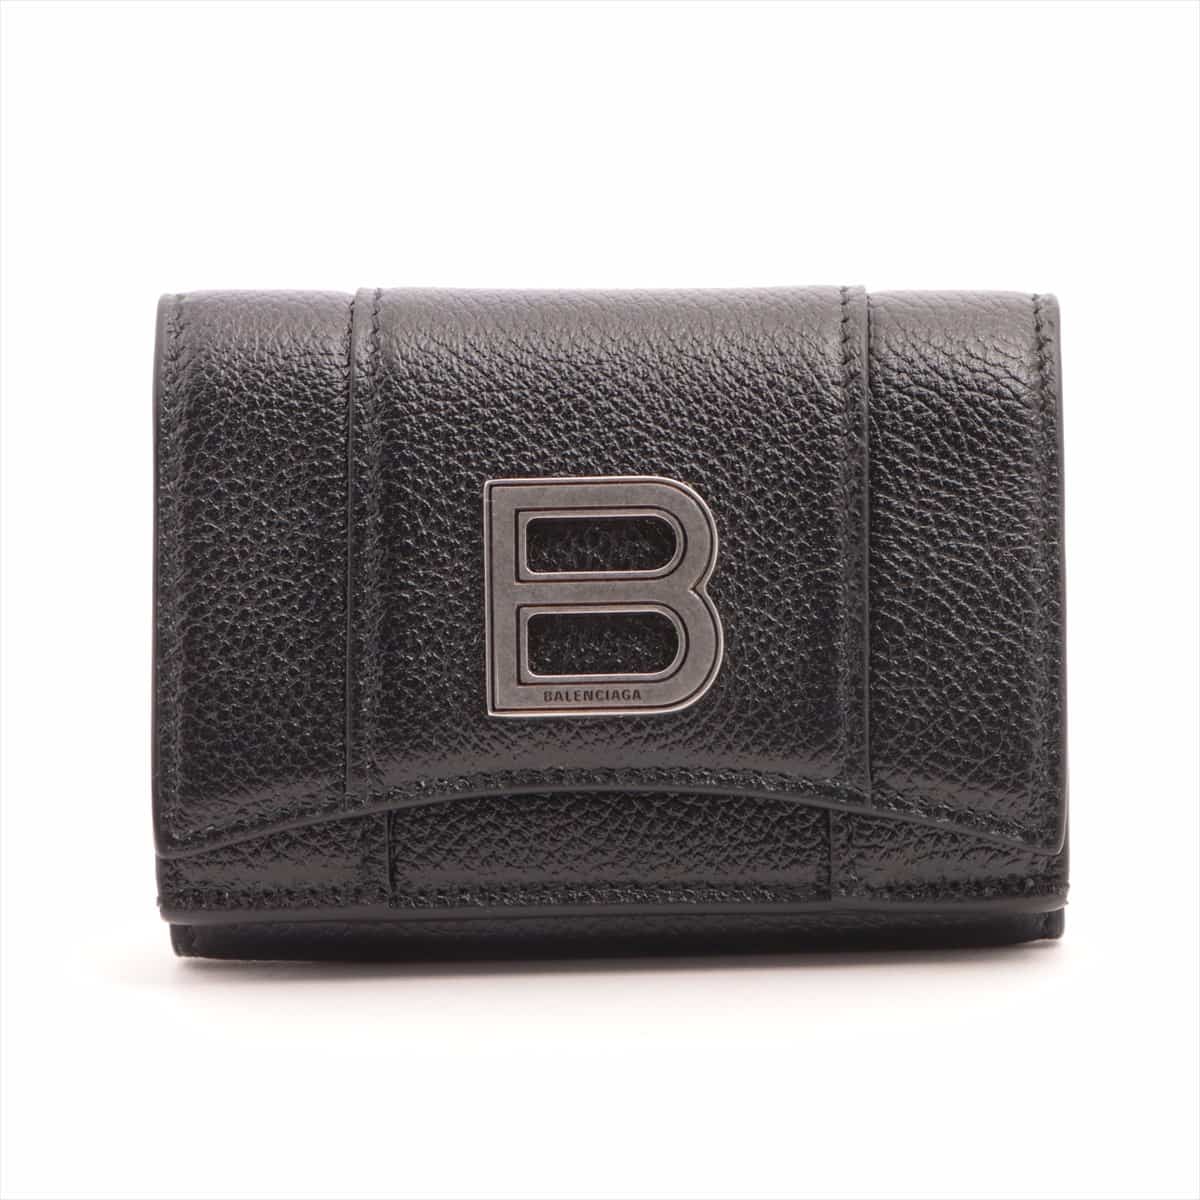 Balenciaga Hourglass 600212 Leather Wallet Black